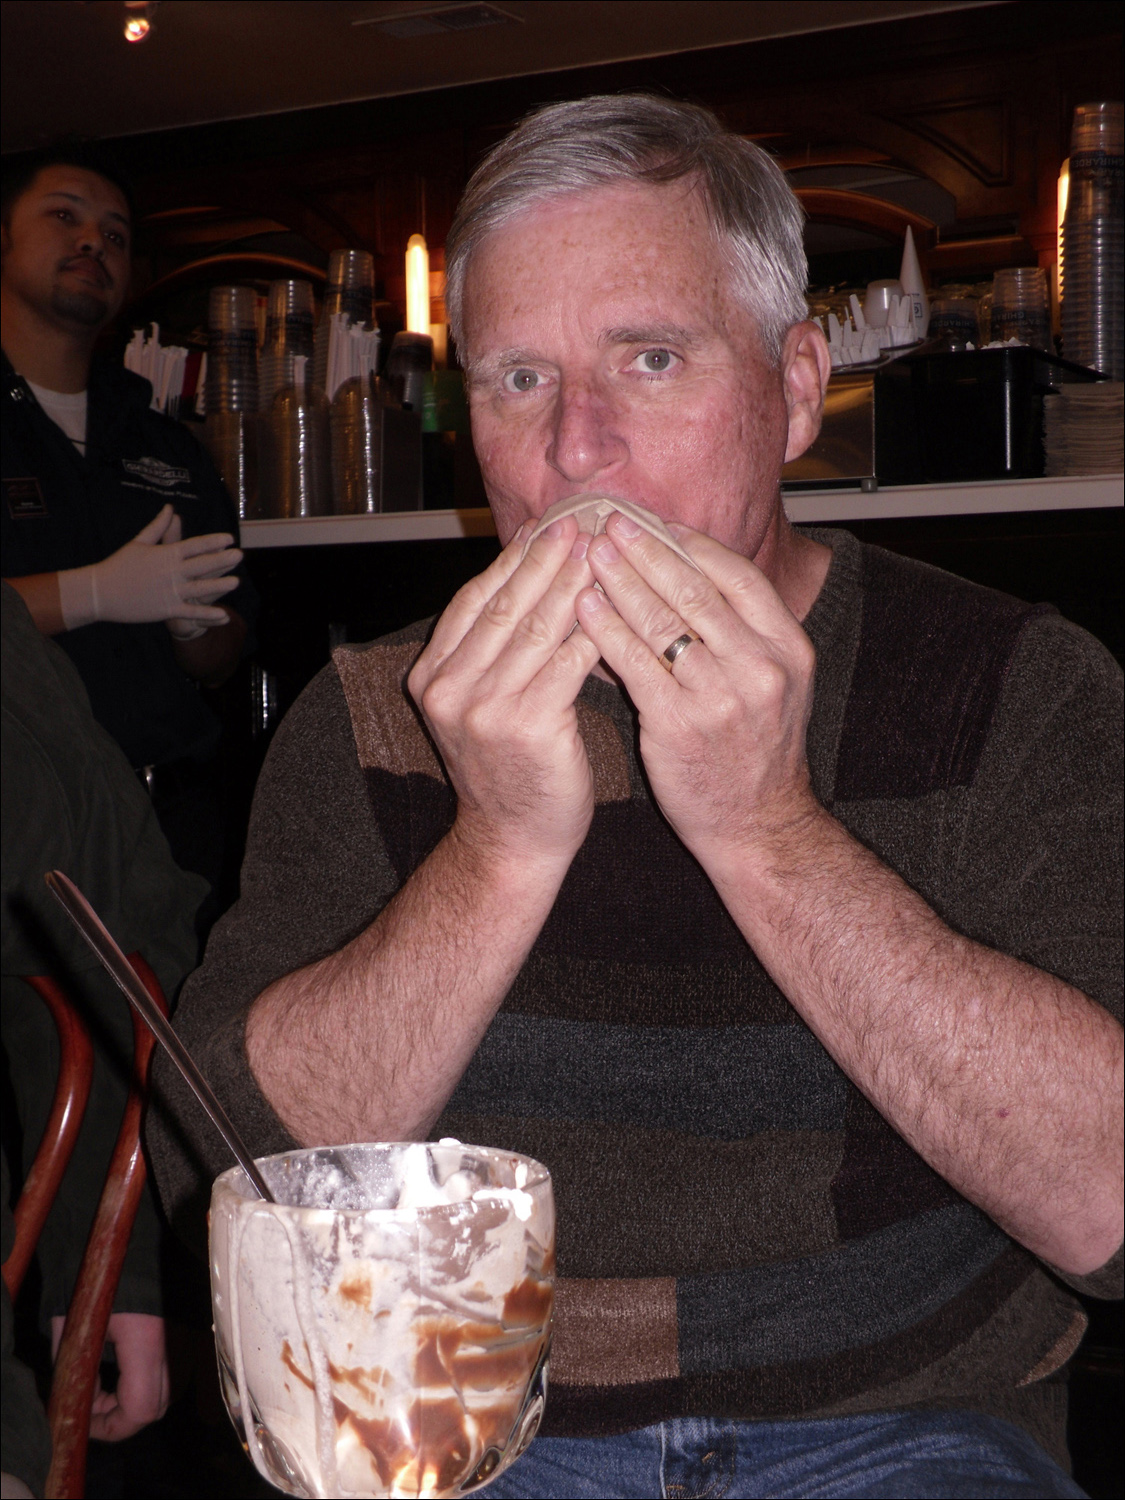 Bob finishing his part of a chocolate sundae